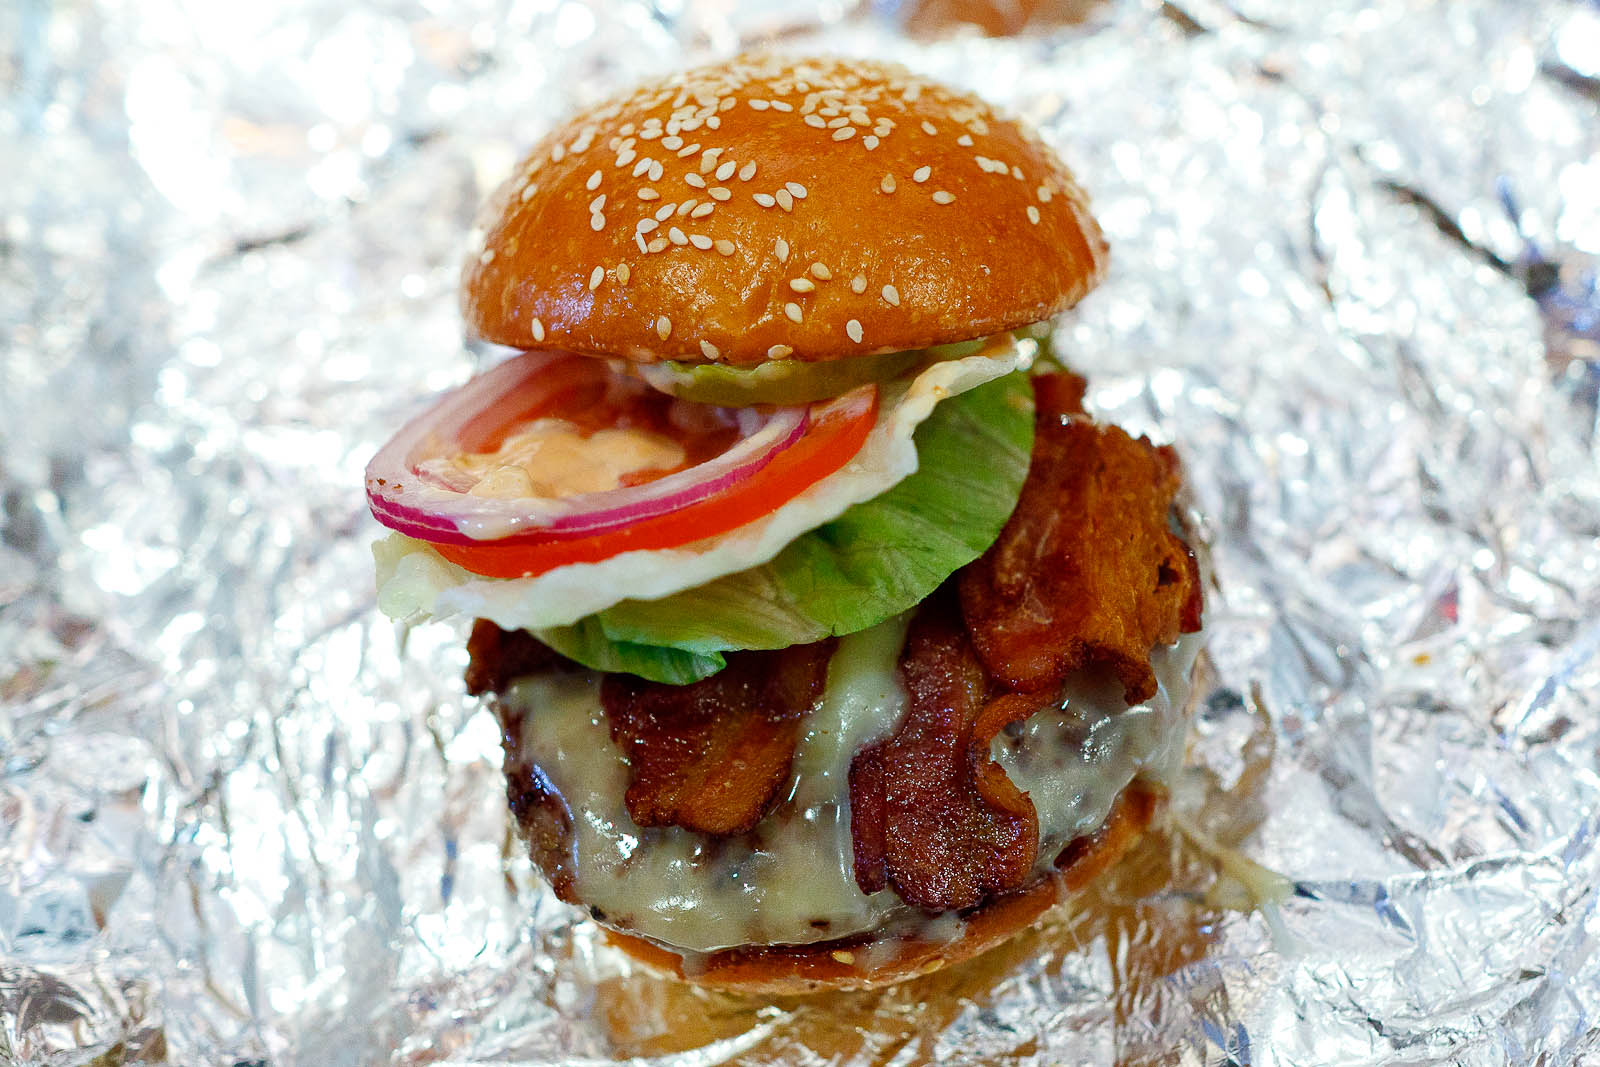 BLT Burger - Double smoked bacon, lettuce, tomato, BLT burger sauce ($7.50)